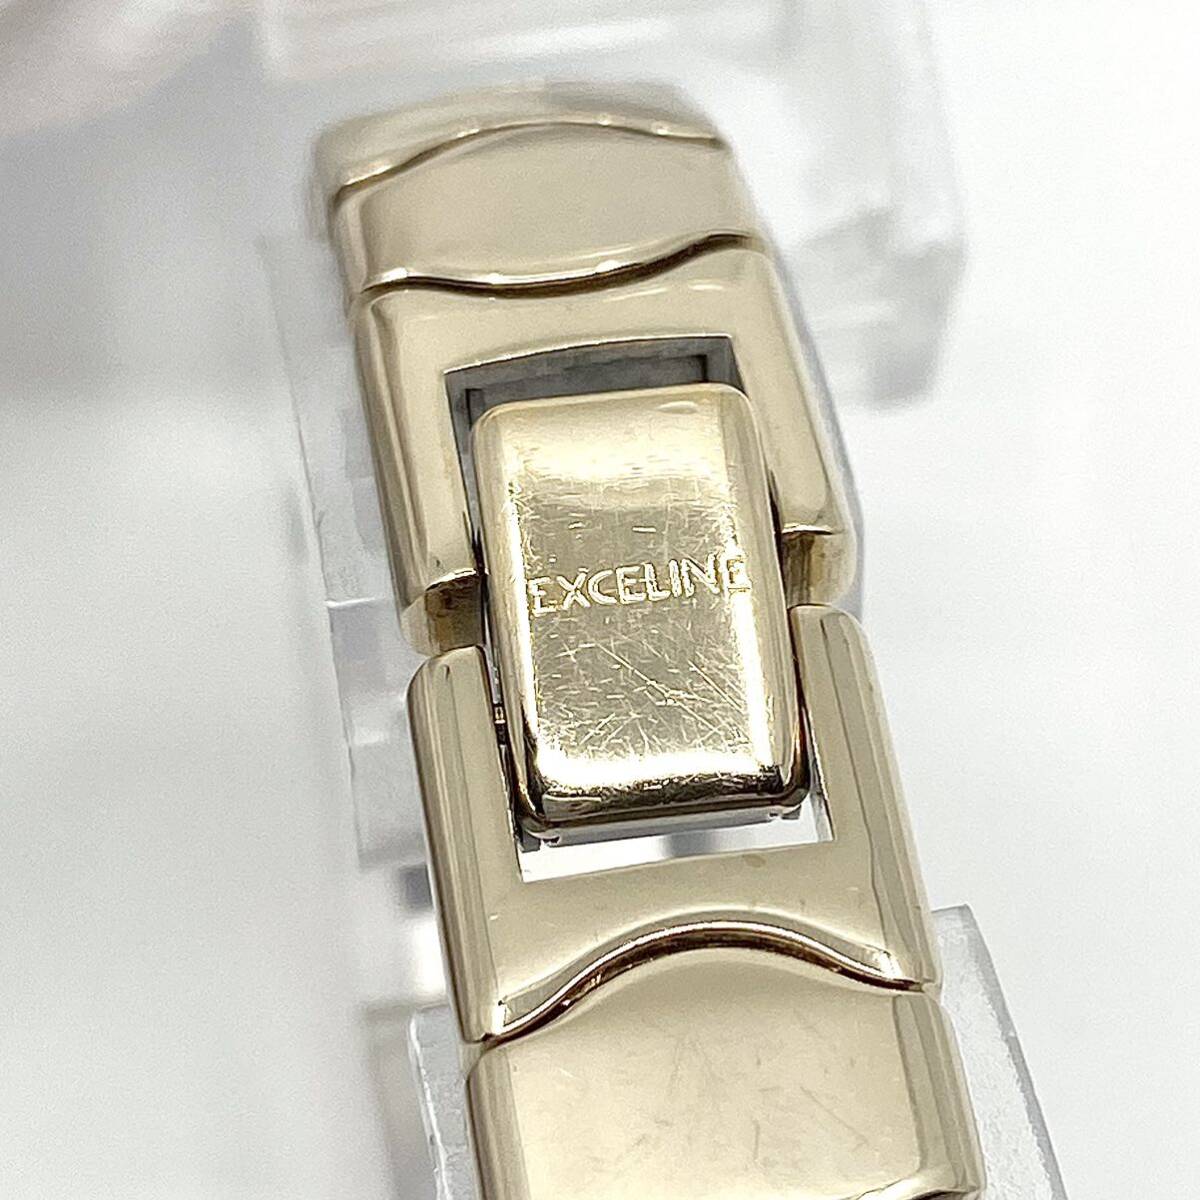 SEIKO EXCELINE наручные часы раунд 2 стрелки кварц quartz Gold золотой Seiko Exceline Y769